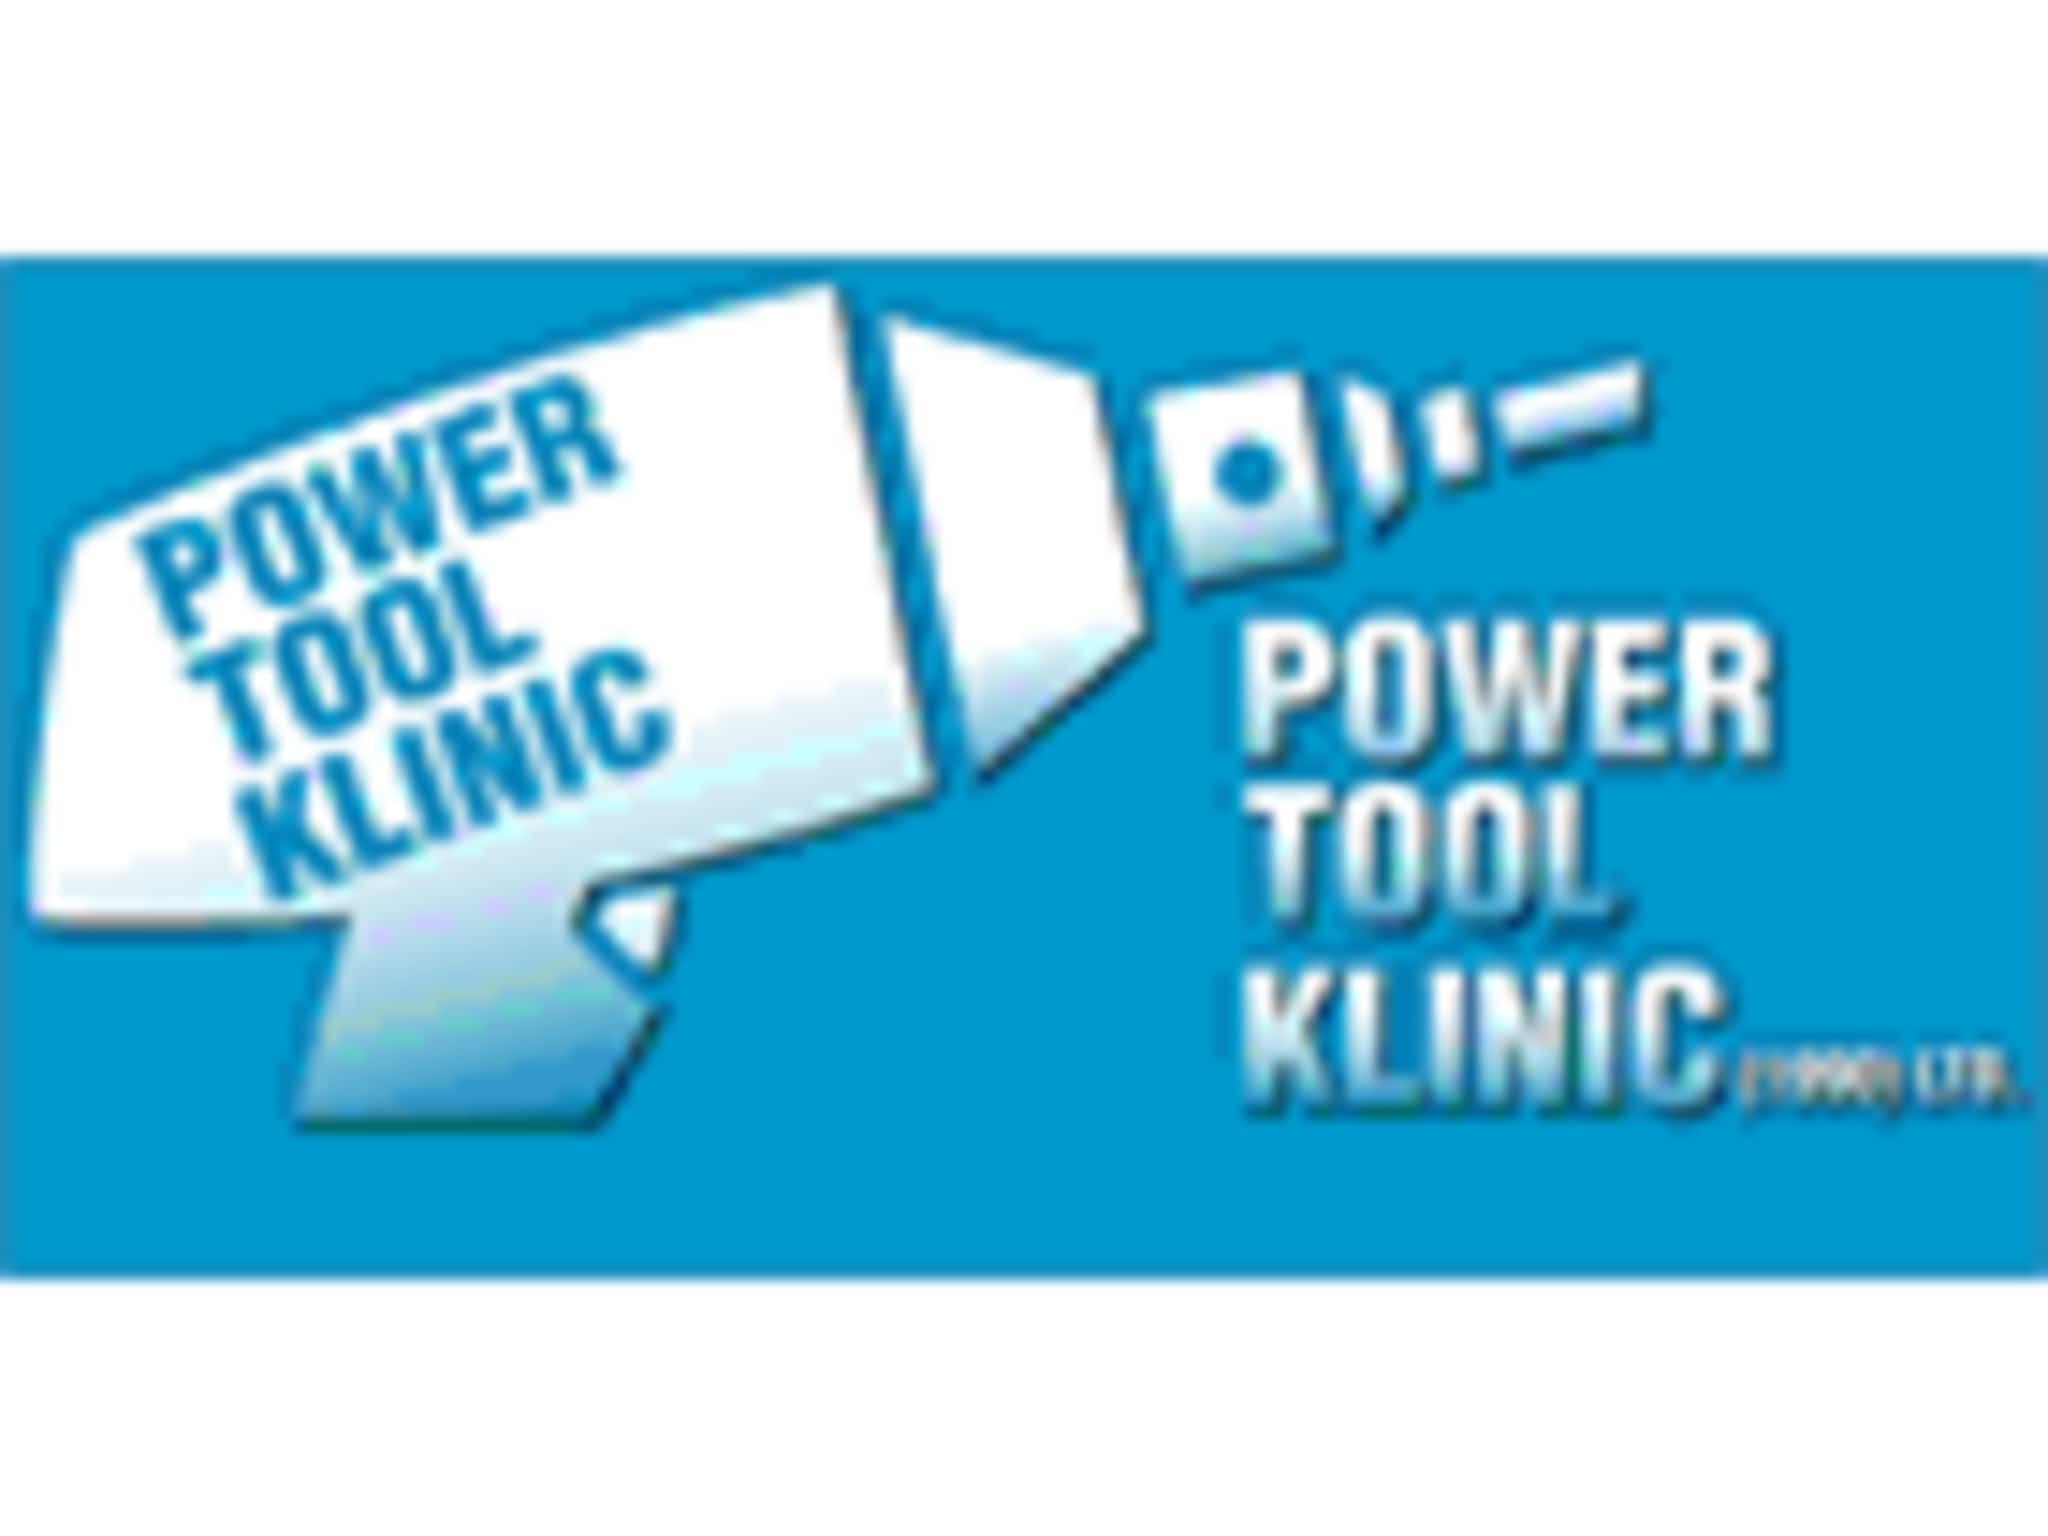 photo Power Tool Klinic (1990) Ltd